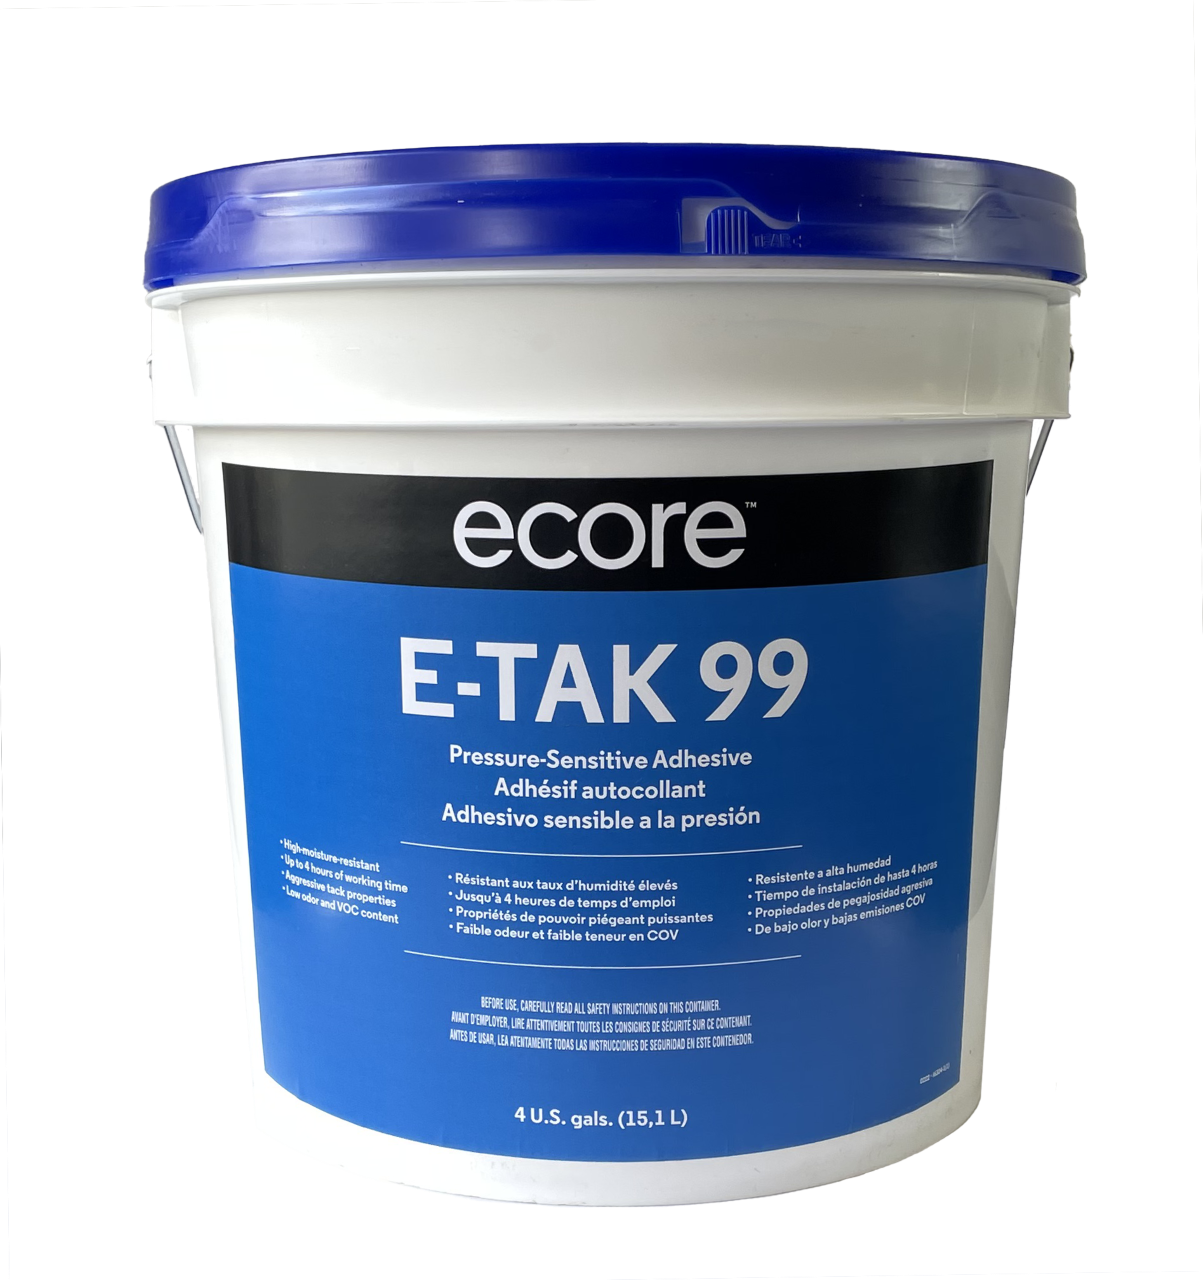 E-TAK 99 is a premium, pressure sensitive, multi-flooring adhesive and plasticizer migration blocker offered by Ecore